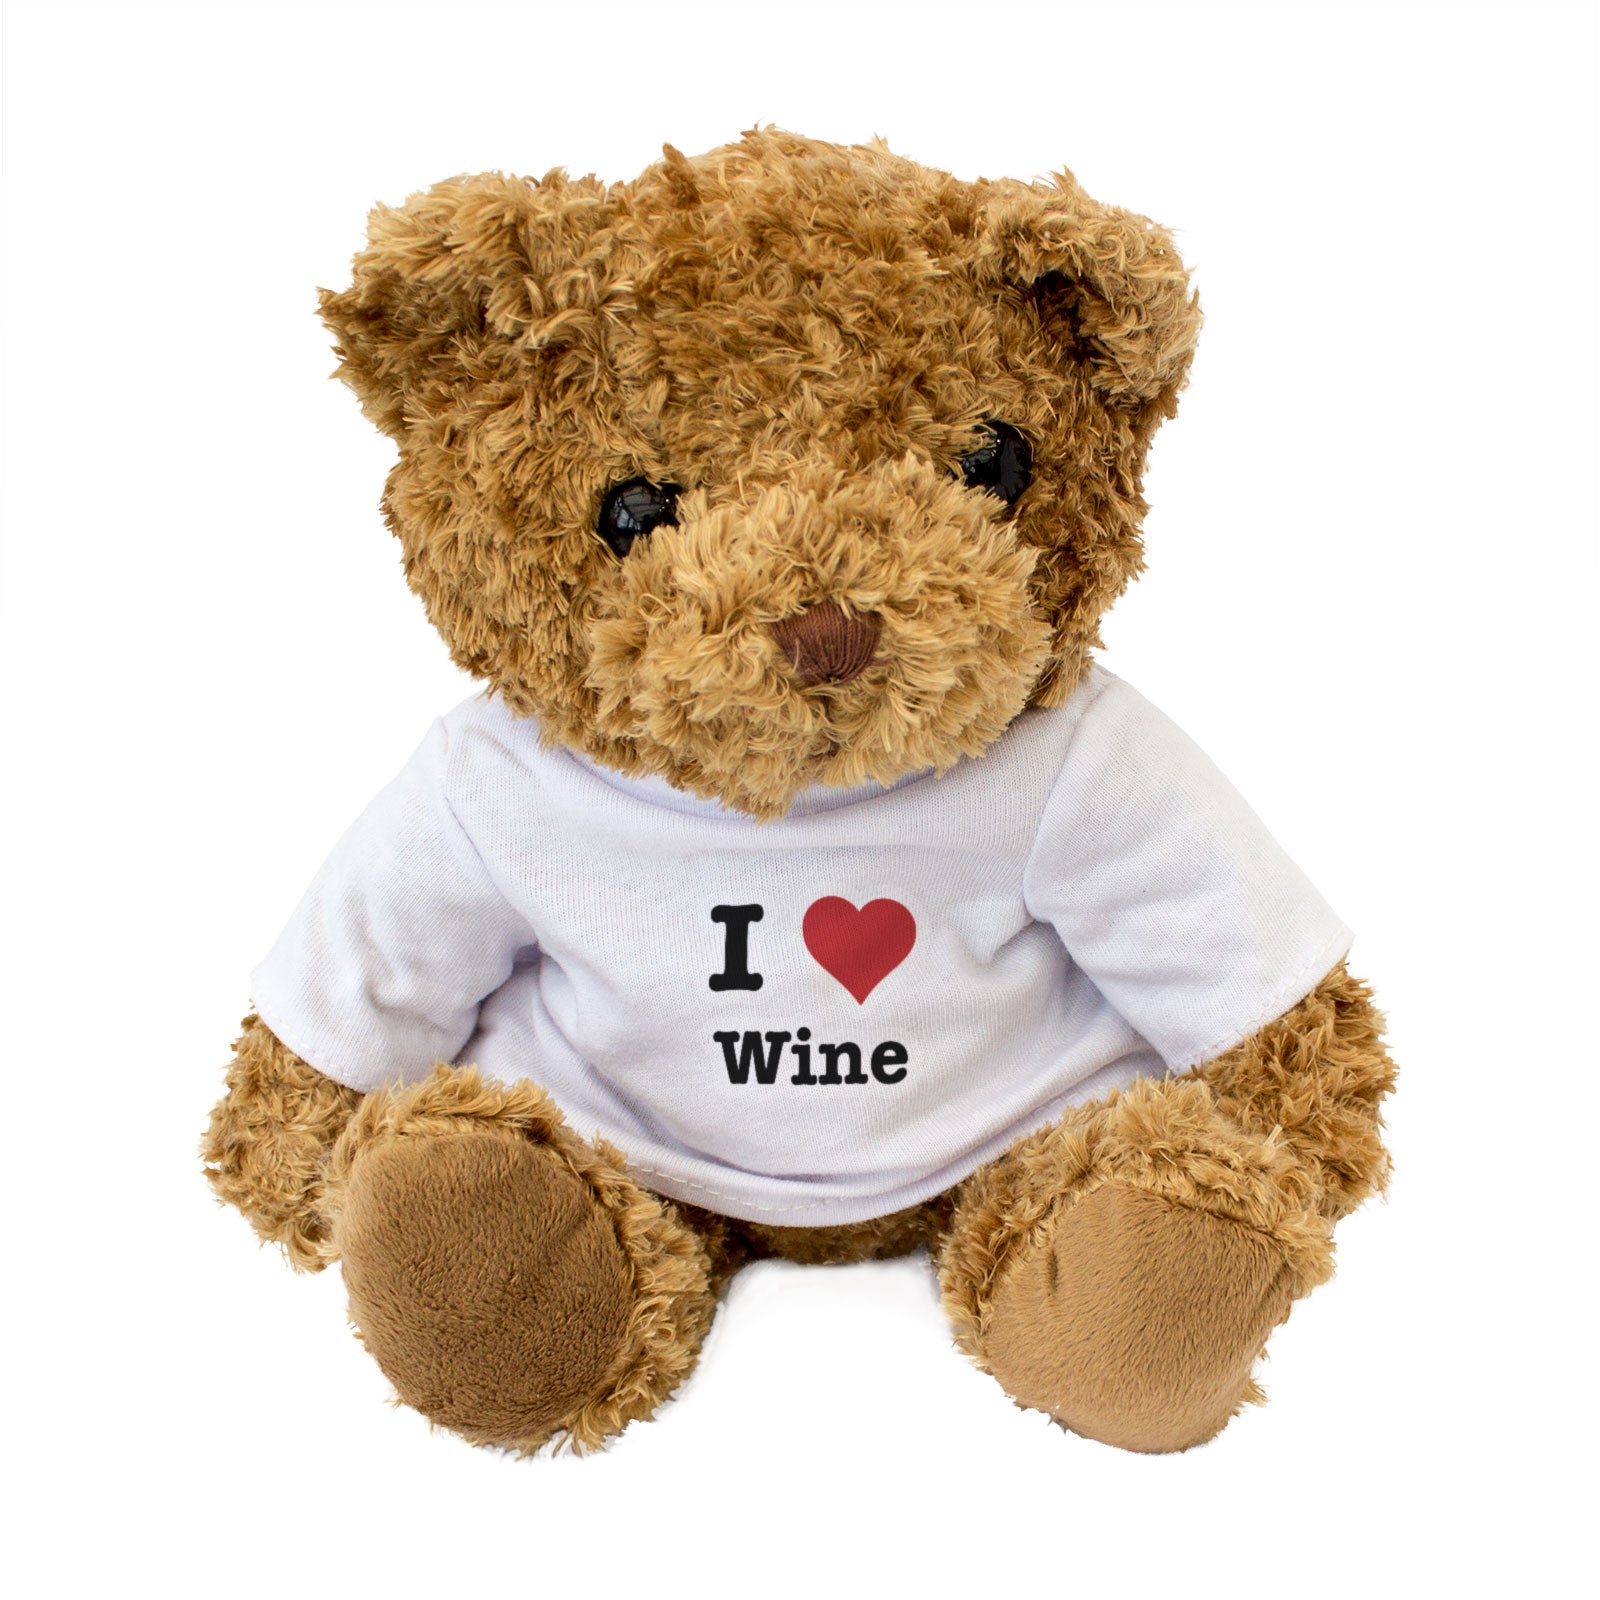 I Love Wine - Teddy Bear